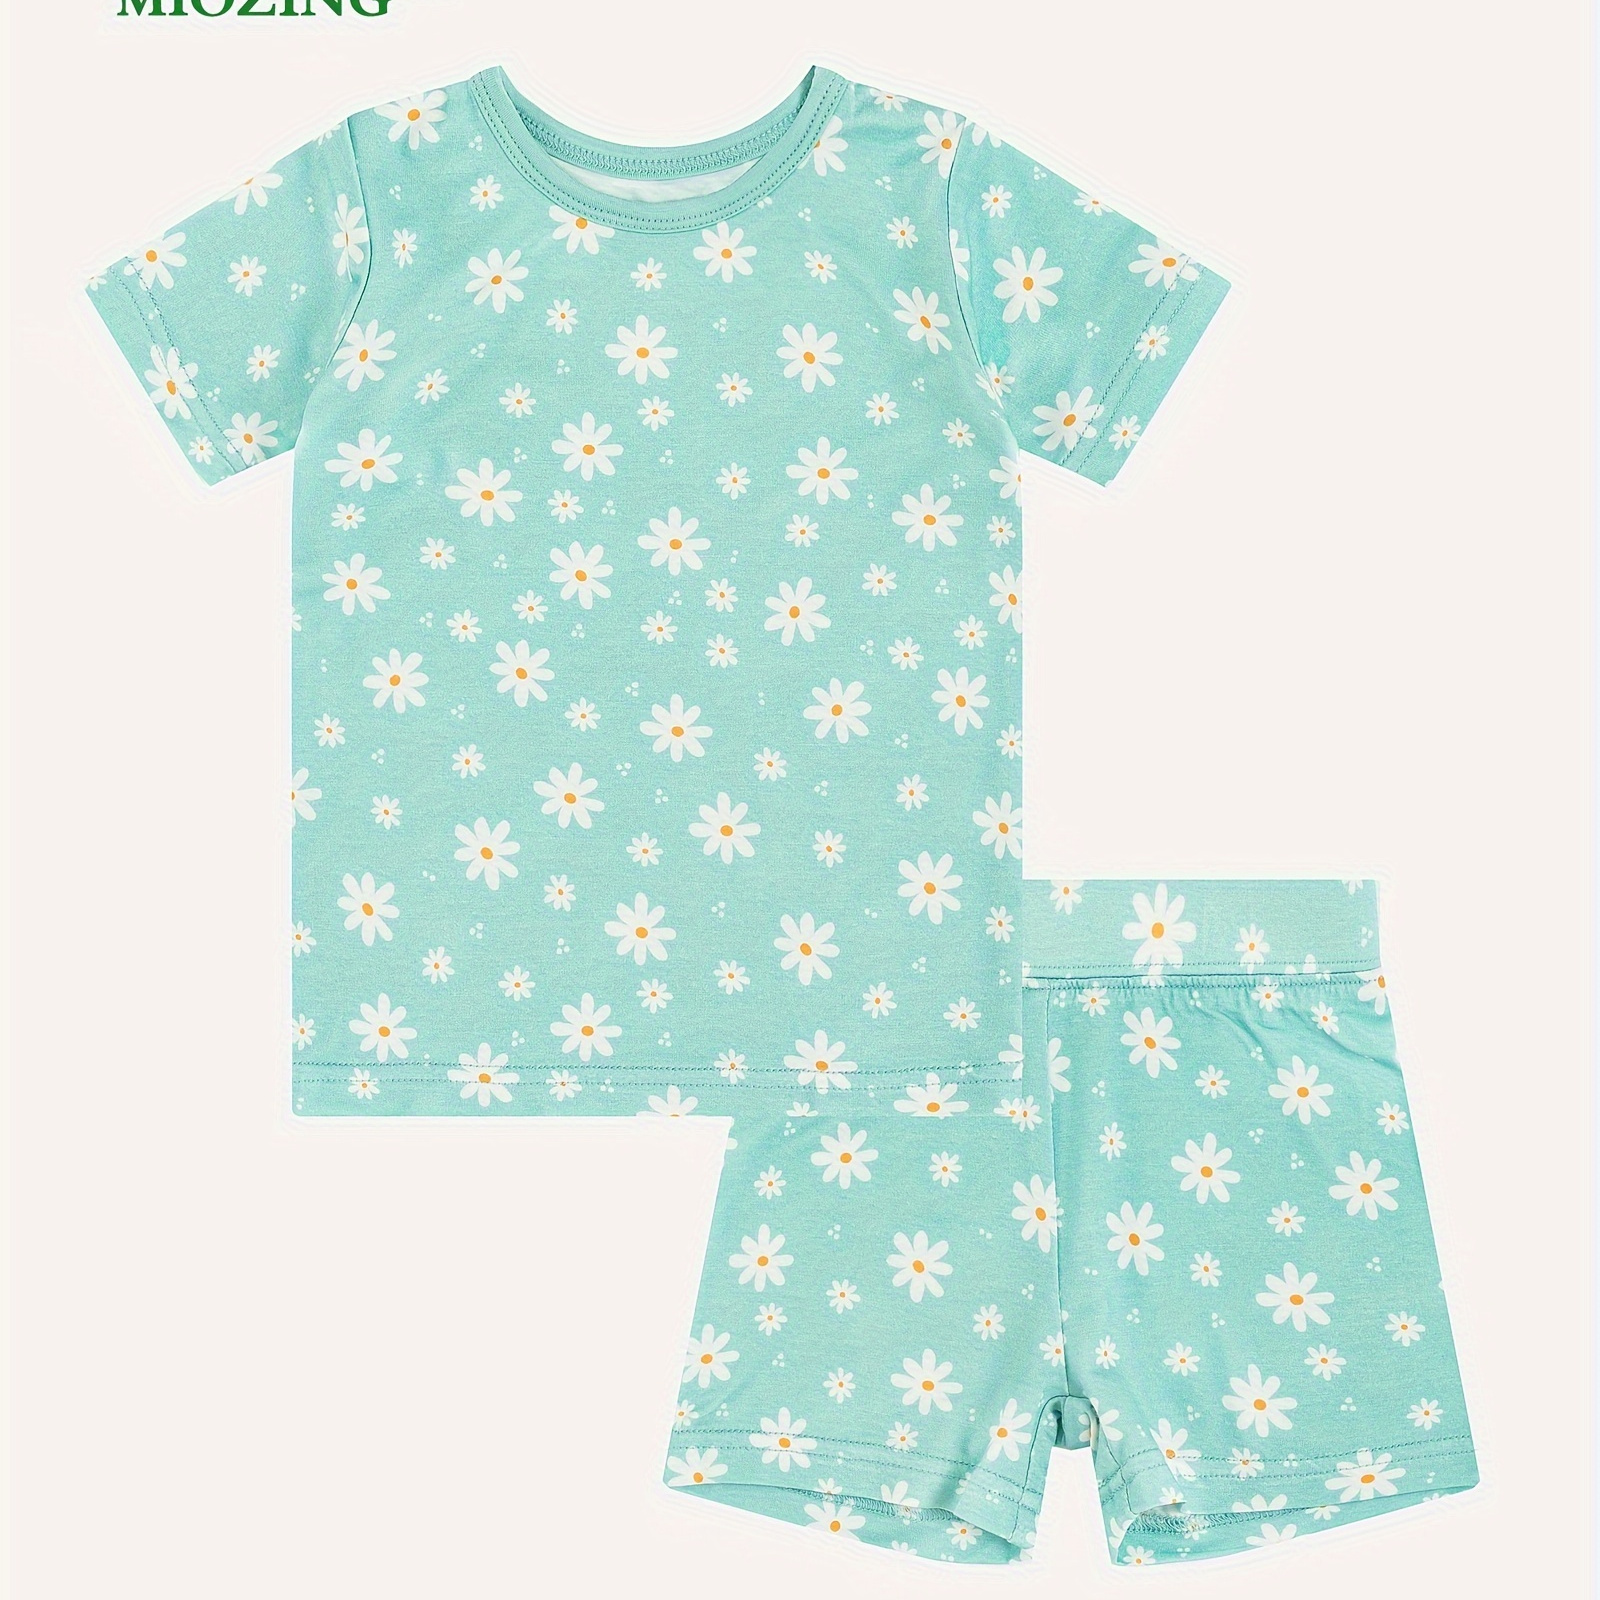 

Miozing Bamboo Fiber 2pcs, Toddler Kid's T-shirt & Comfy Shorts, Cartoon Daisy Full Print Set, Baby Girl's Clothes